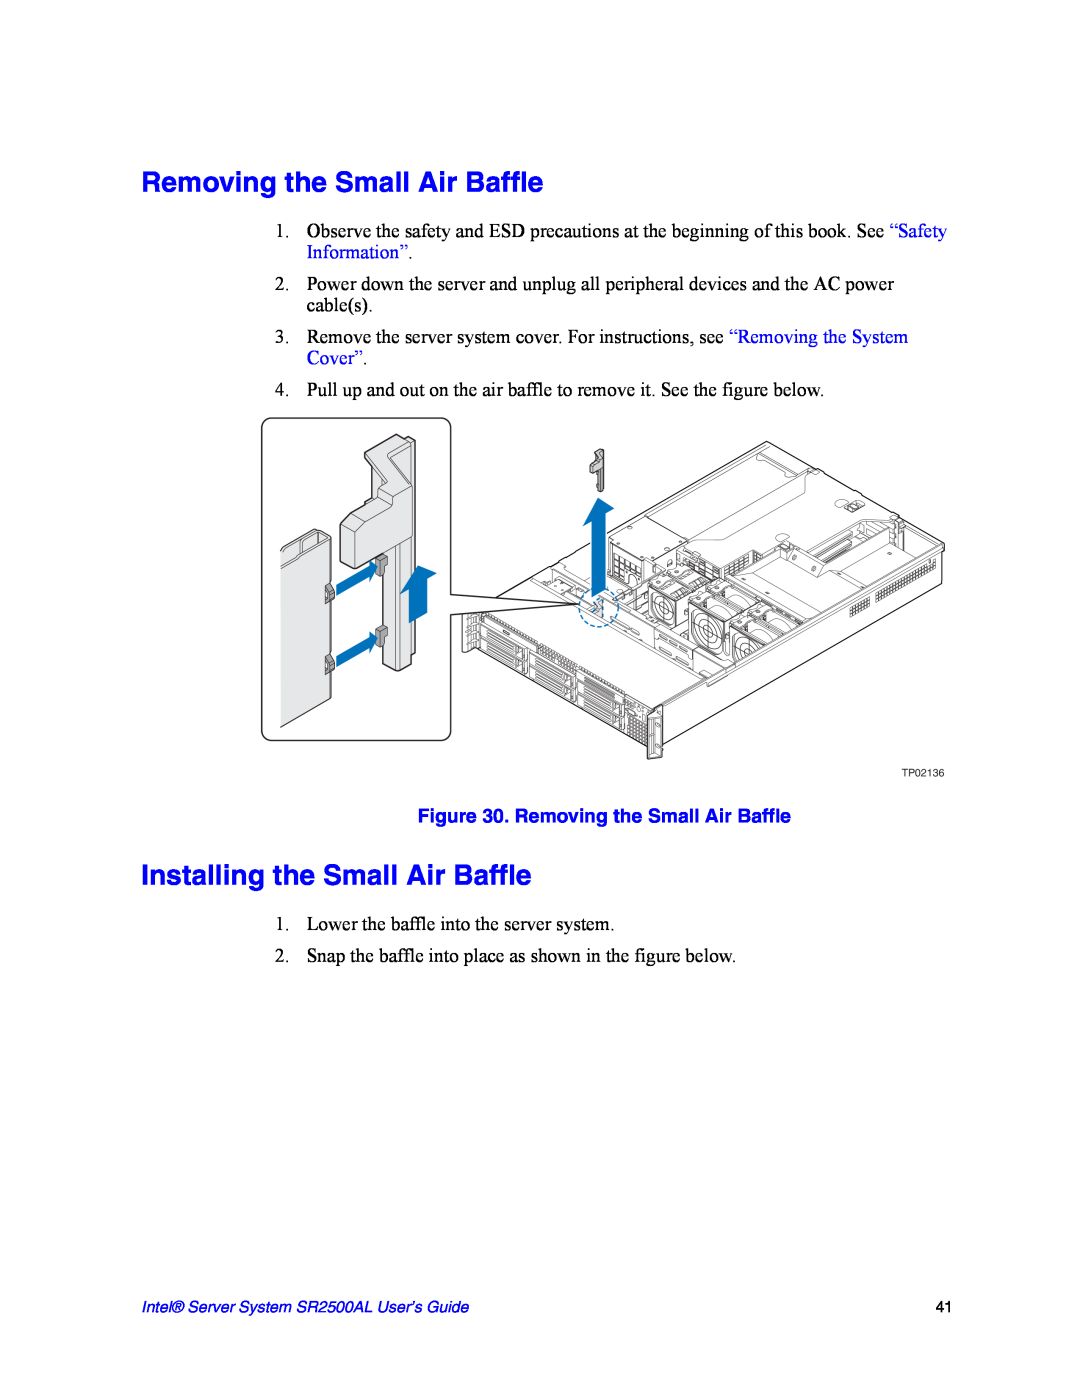 Intel SR2500AL manual Removing the Small Air Baffle, Installing the Small Air Baffle 